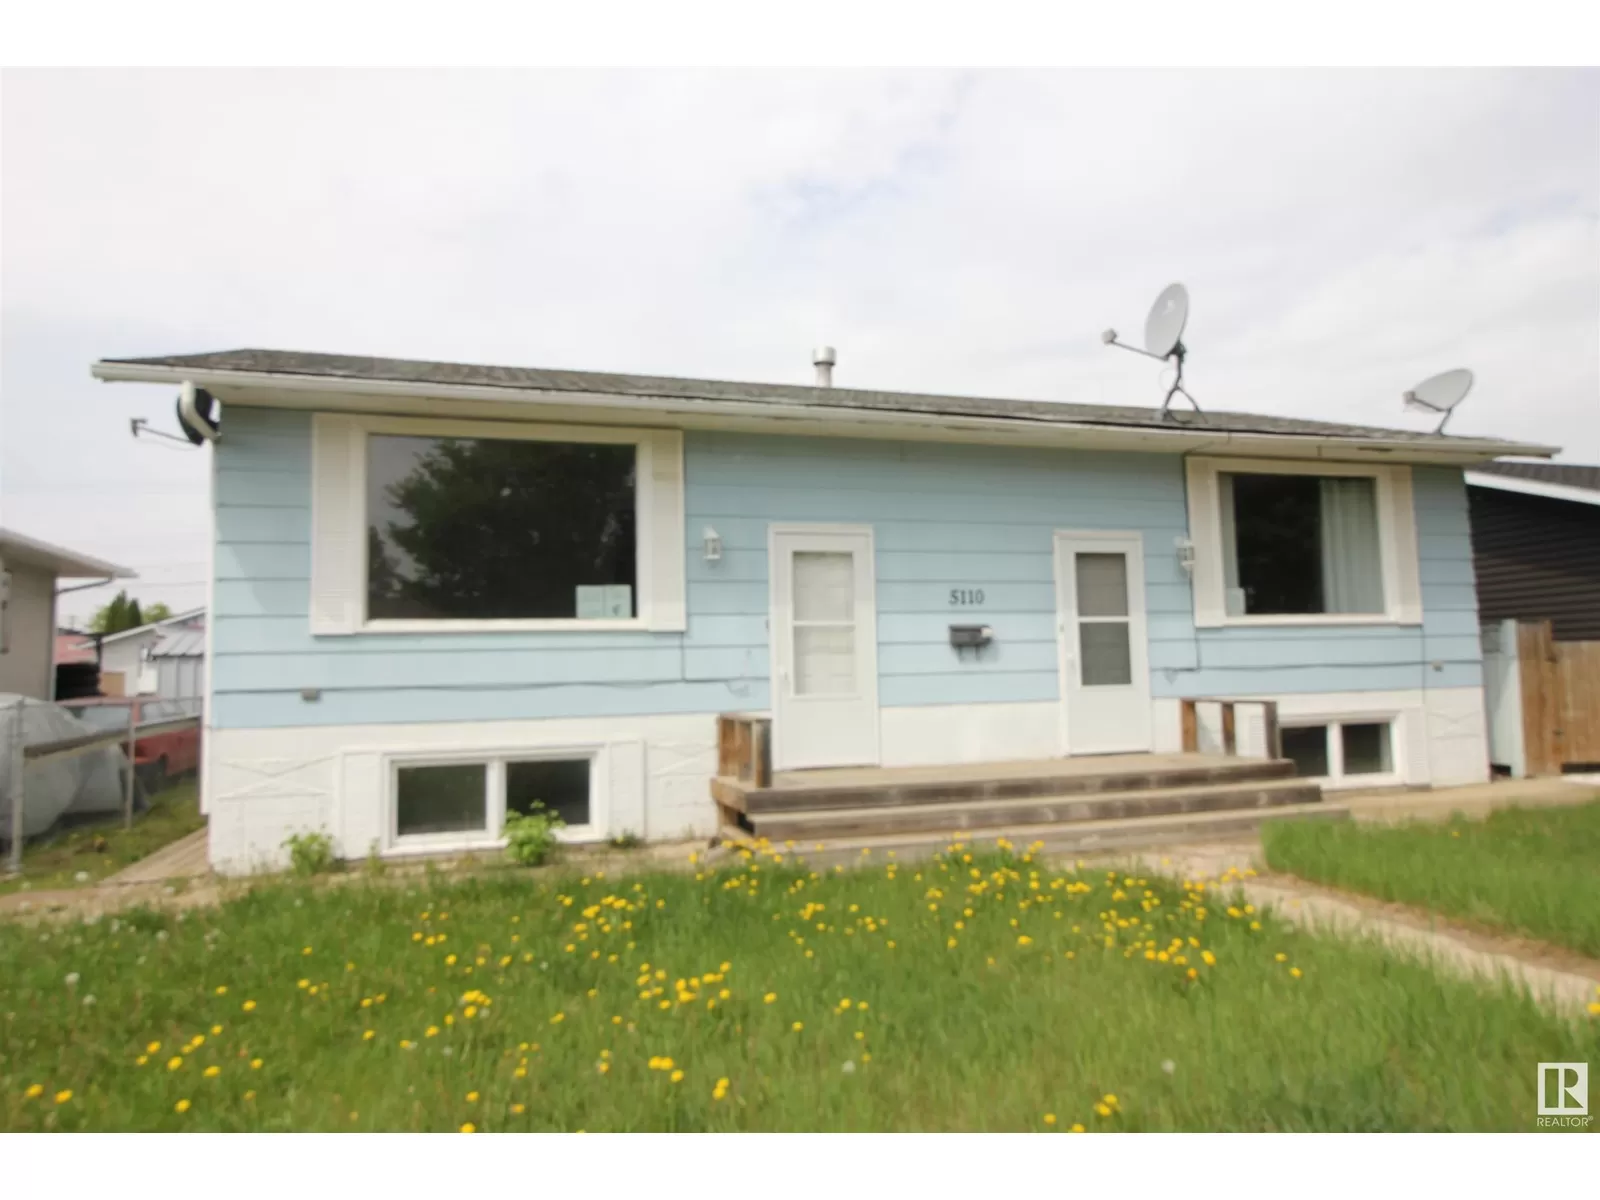 Duplex for rent: 5110 46 St, Mannville, Alberta T0B 2W0